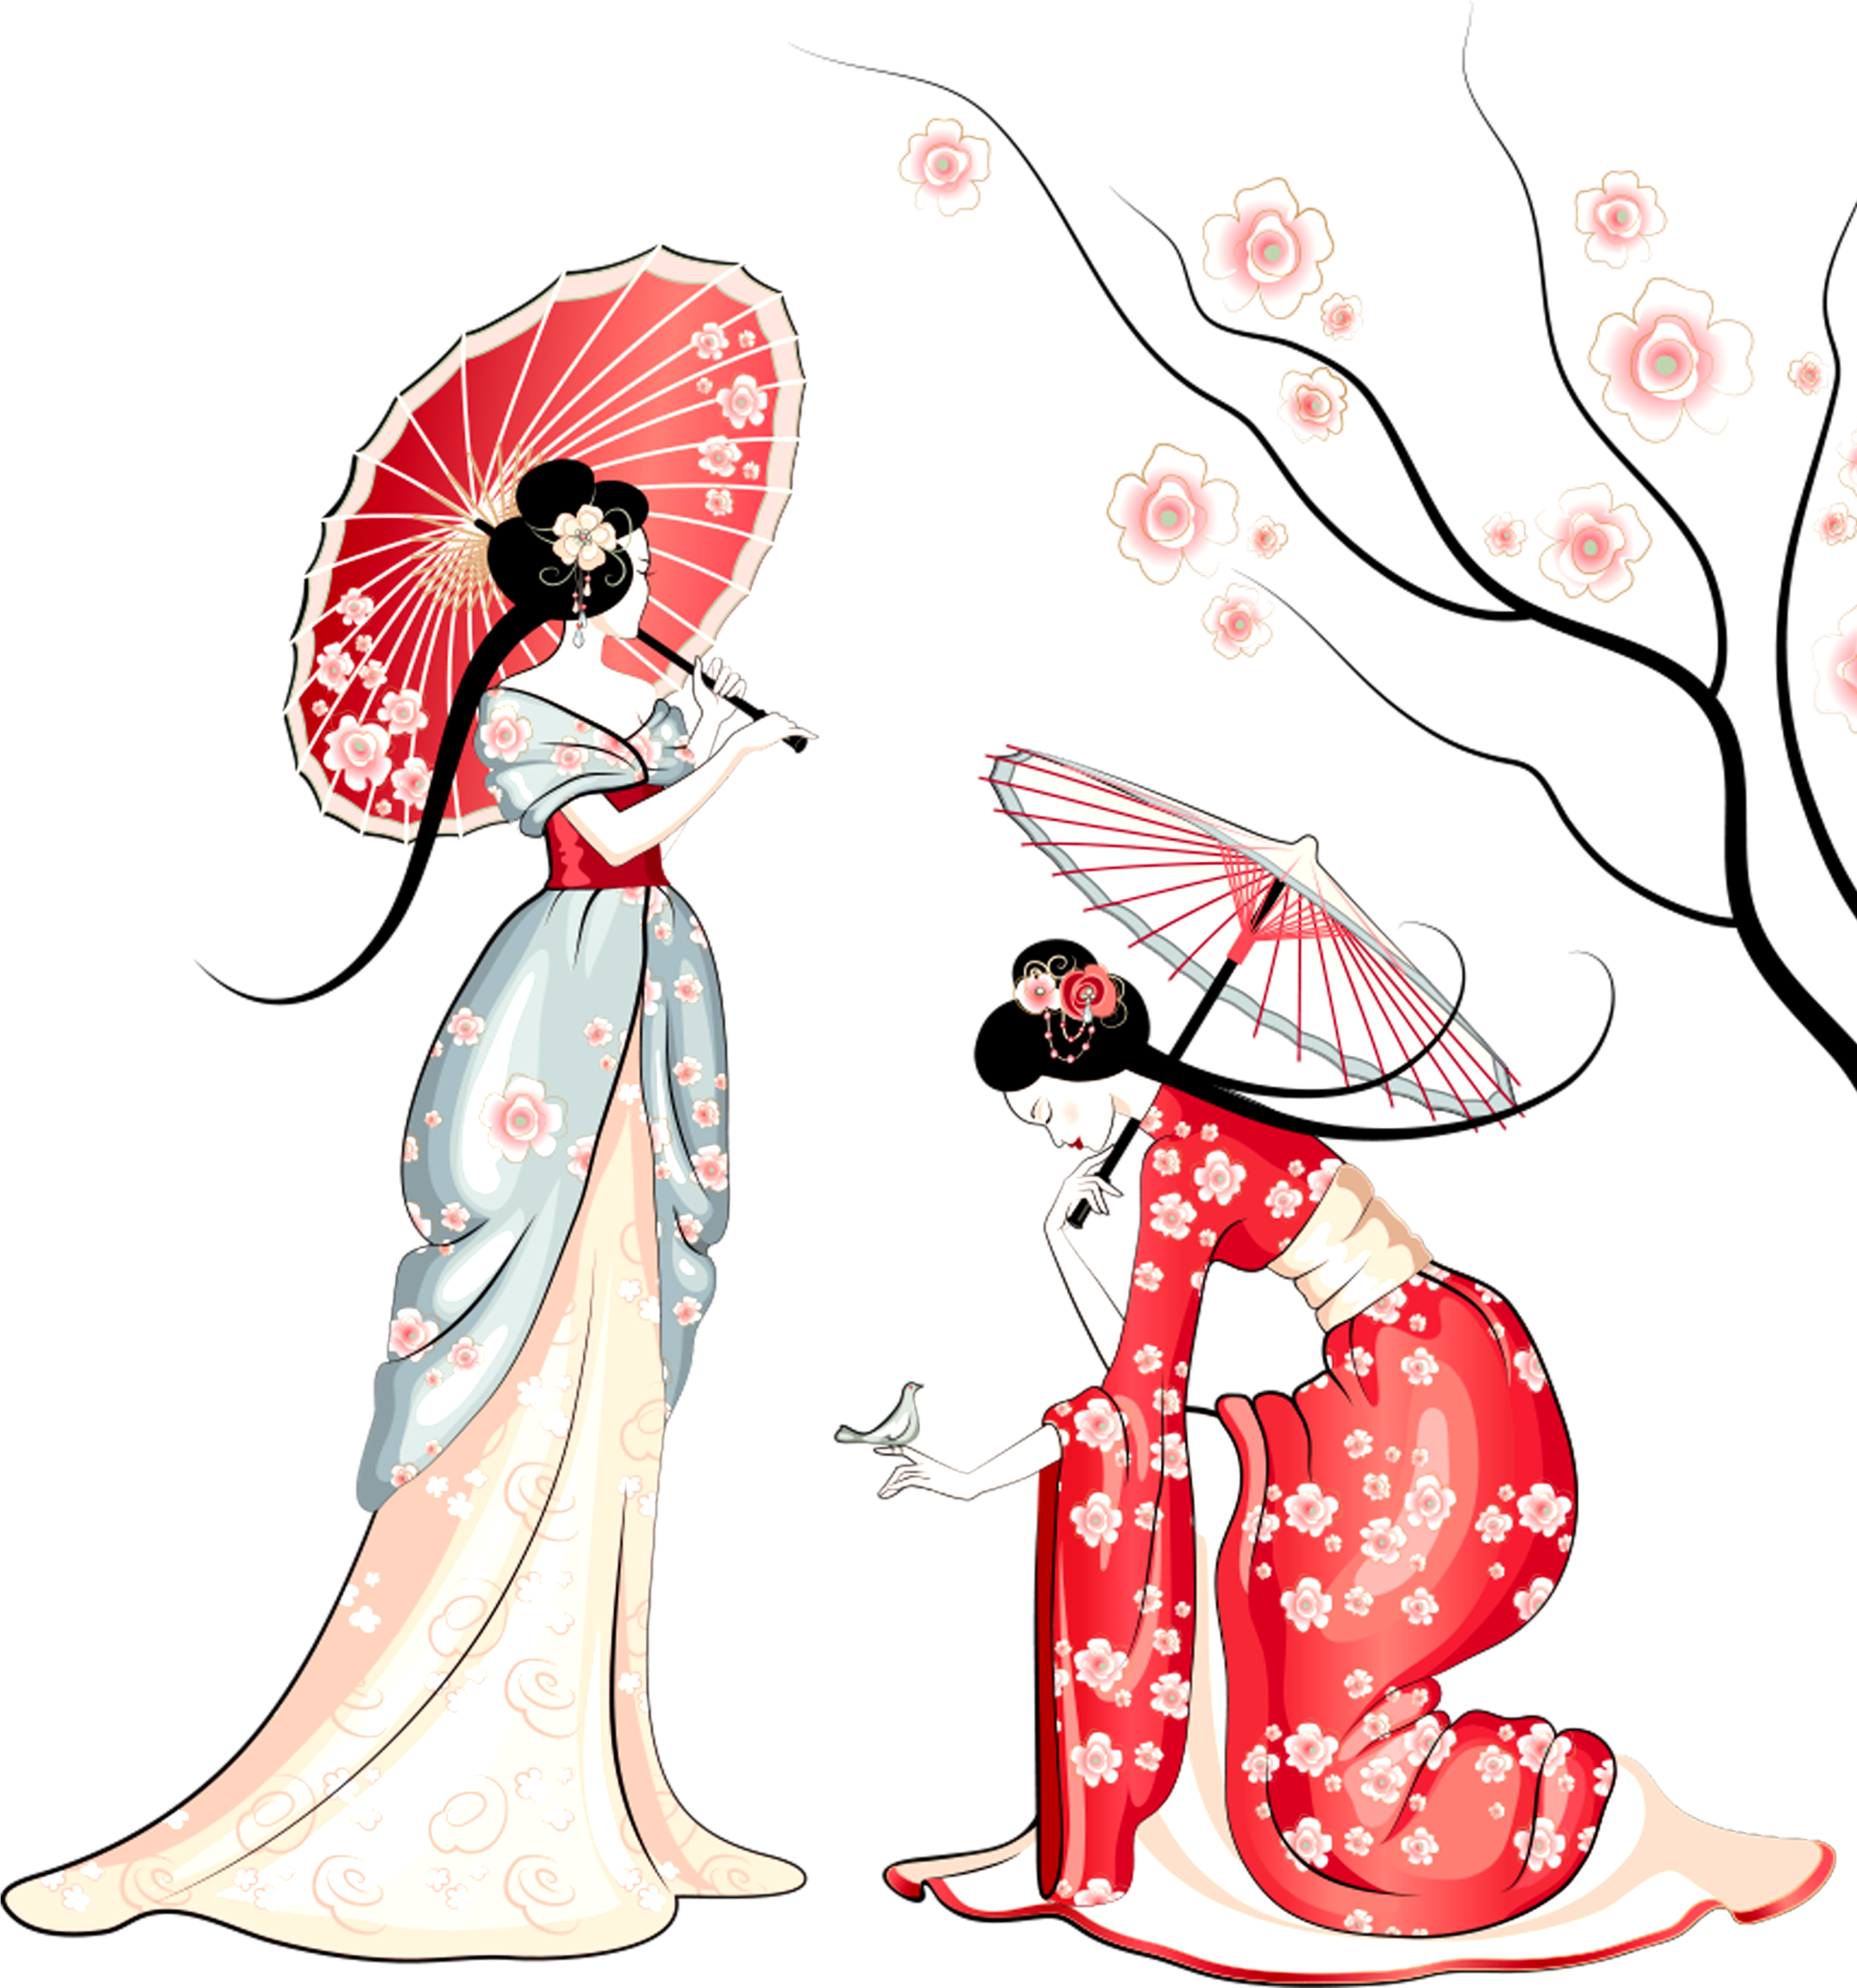 Japan National Cherry Blossom Festival Poster Advertising - Japanese Cherry Blossom Cartoon (4287x3543)